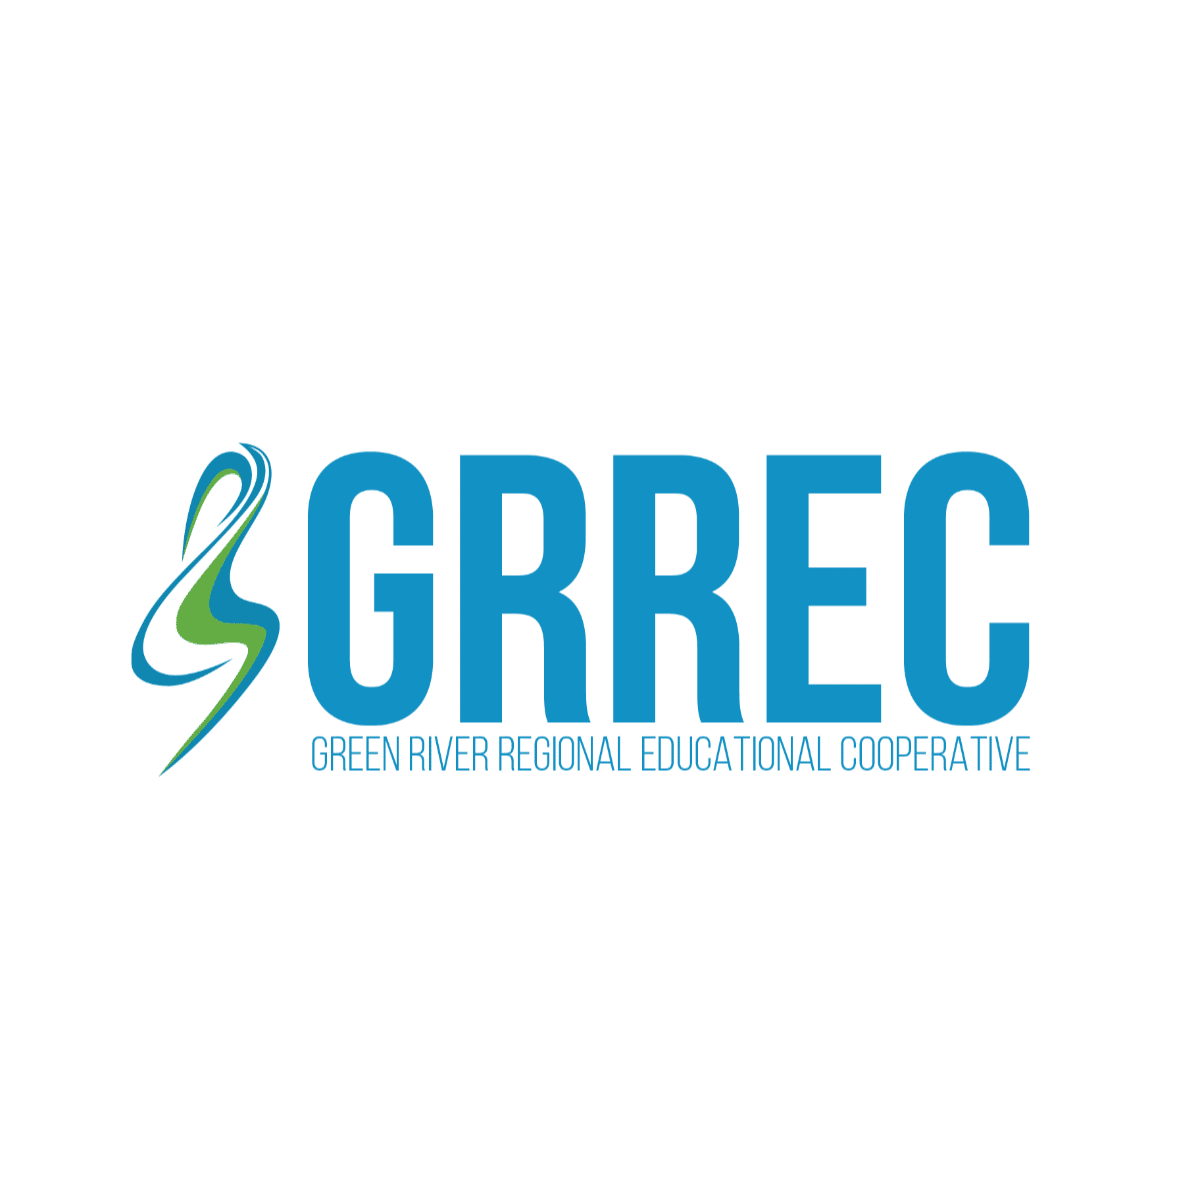 Green River Regional Educational Cooperative